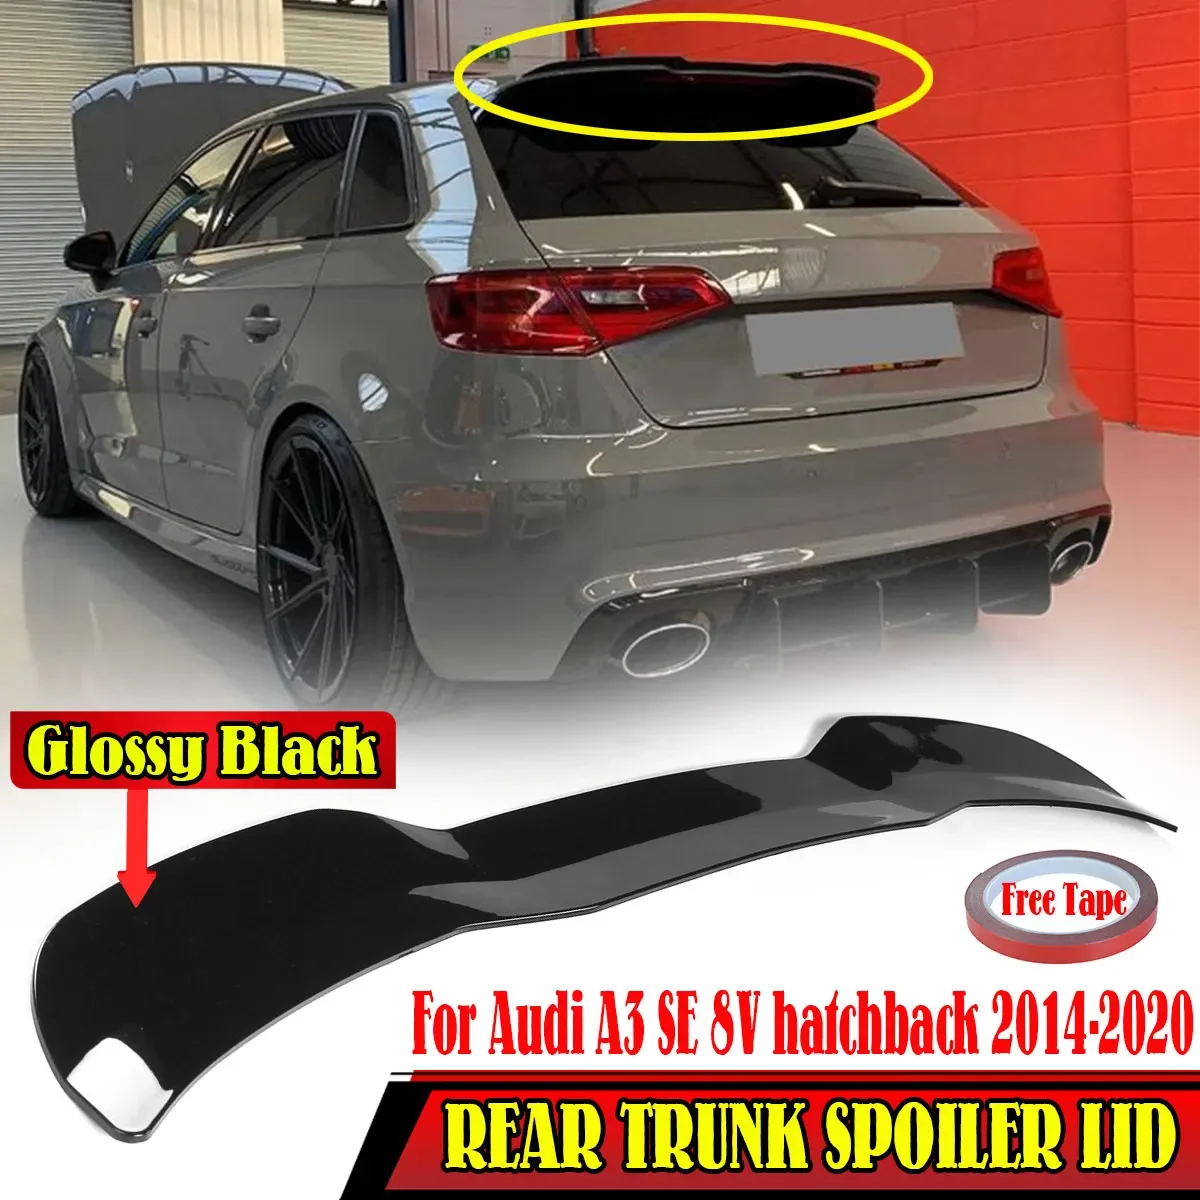 

Black/Carbon Fiber Look Rear Wing Lip Extension For Audi A3 SE 8V hatchback 2014-2020 Rear Trunk Spoiler Boot Wing Lip Body Kit